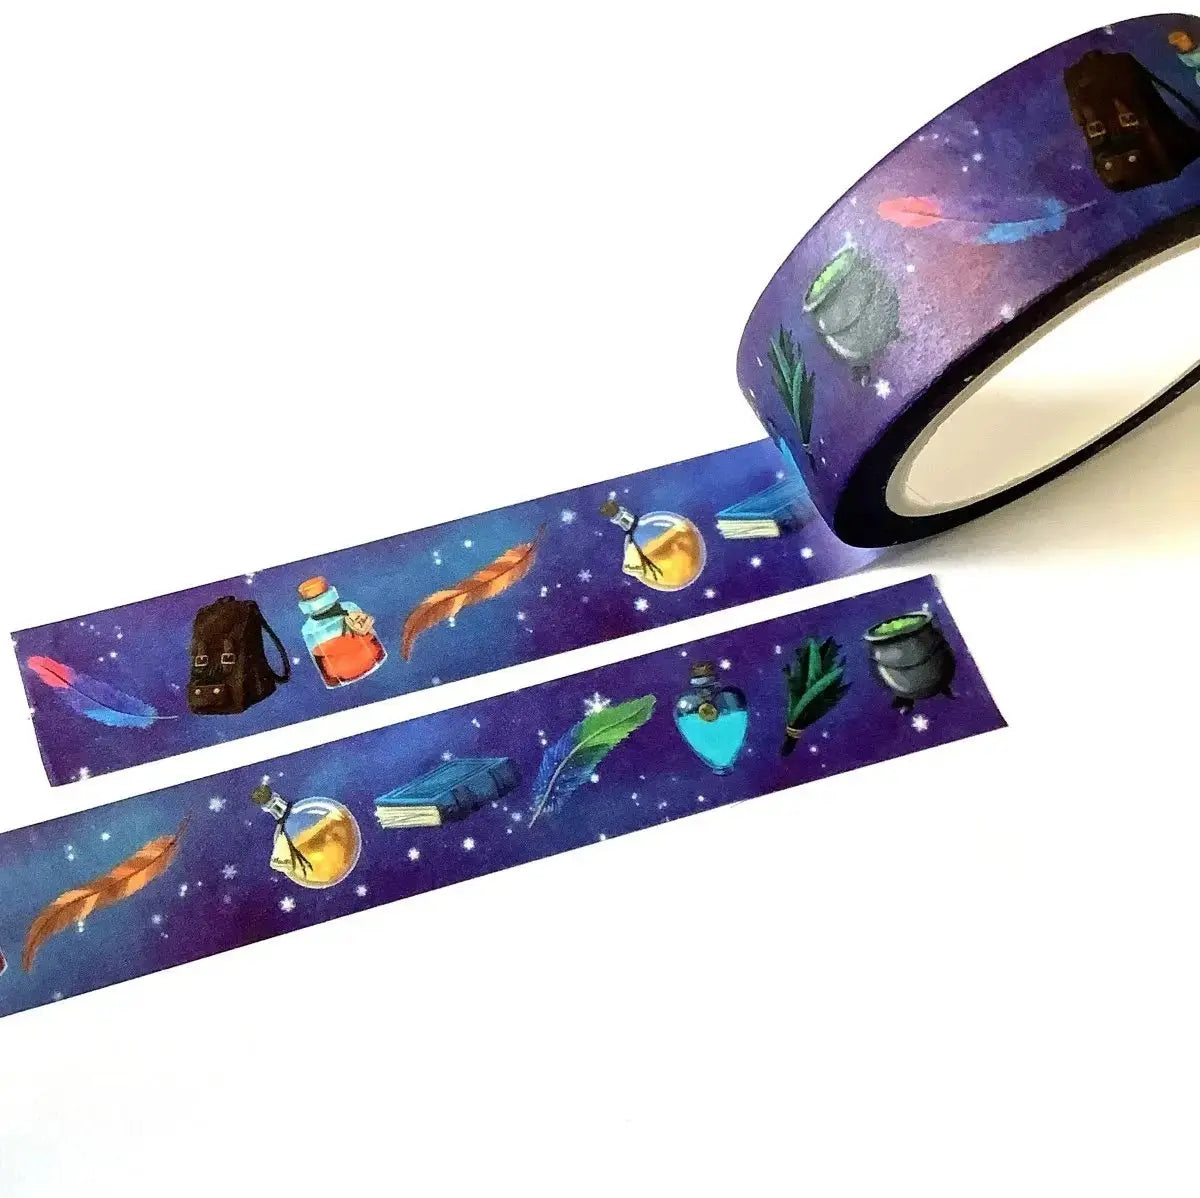 Wizard's Washi Tape - Magic Washi Tape - custom washi tape - Wizard Dream Tape - Eco Friendly Tape - Art, Deco Gift for Magic Lovers Sttelland Boutique